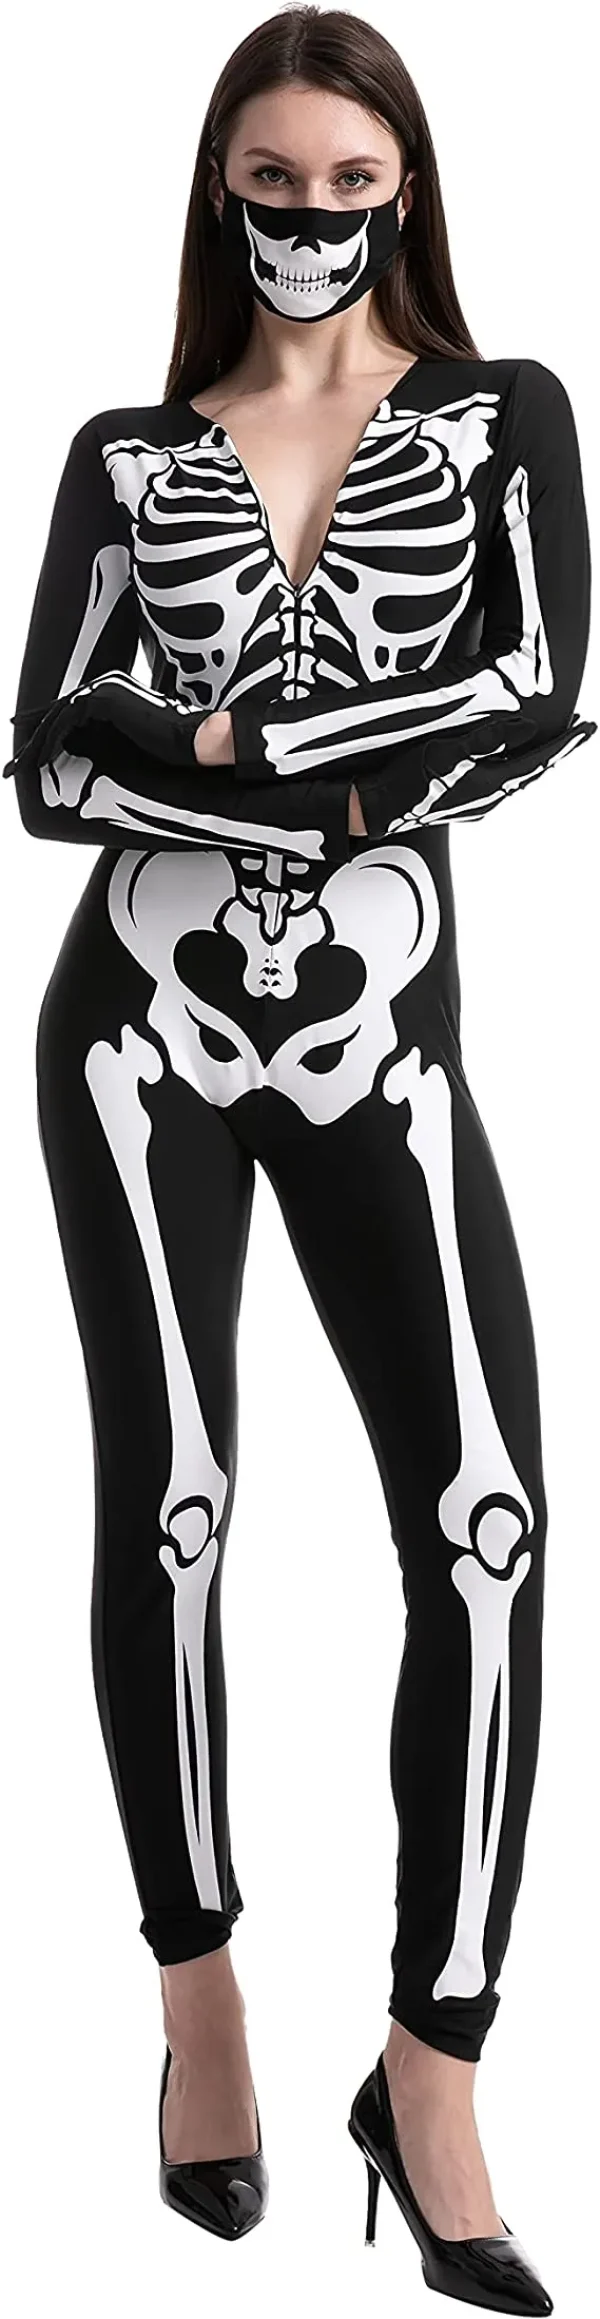 Womens Skeleton Halloween Costume